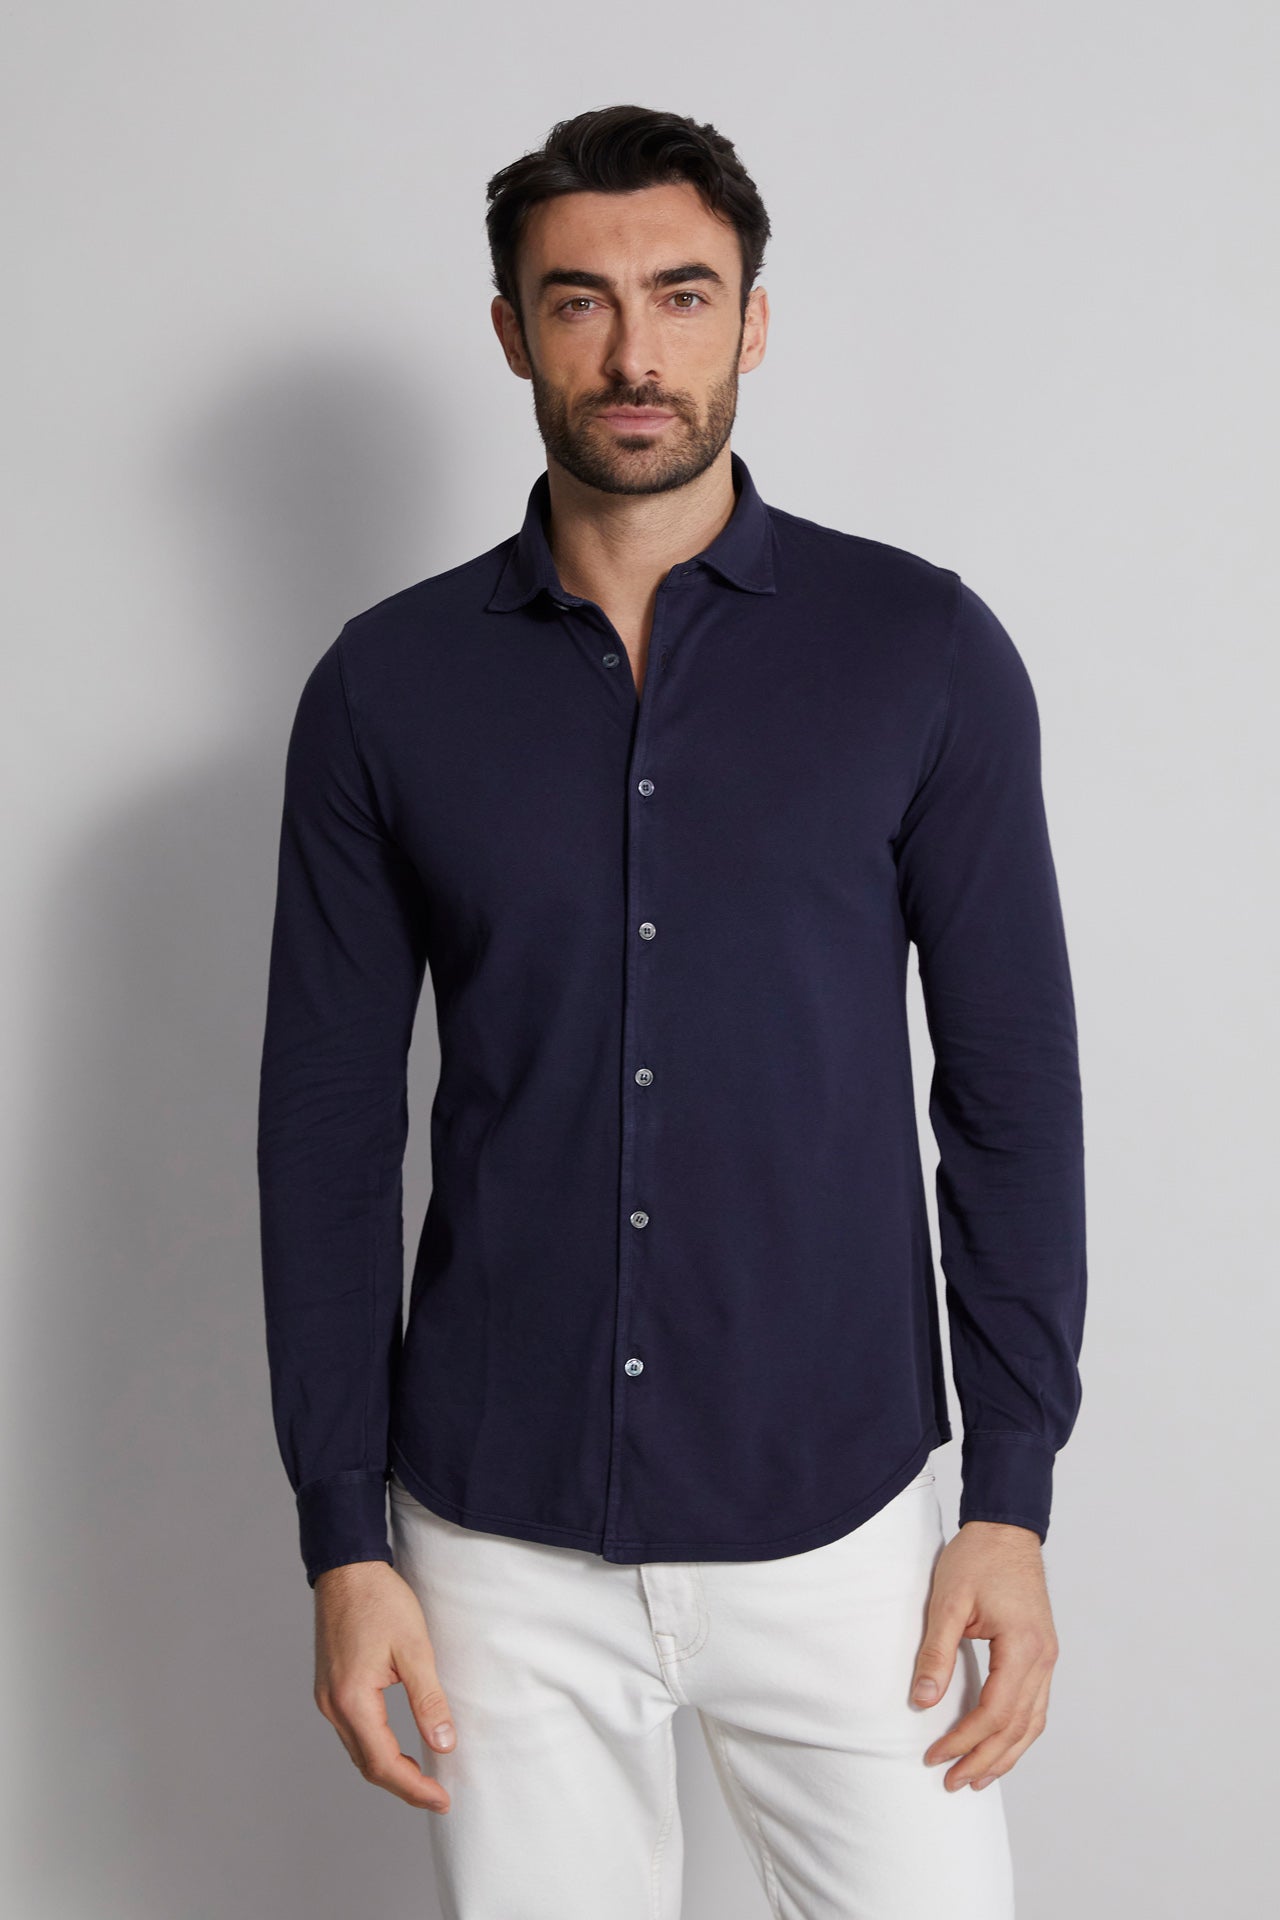 men's designer blue shirt in organic cotton - front view 